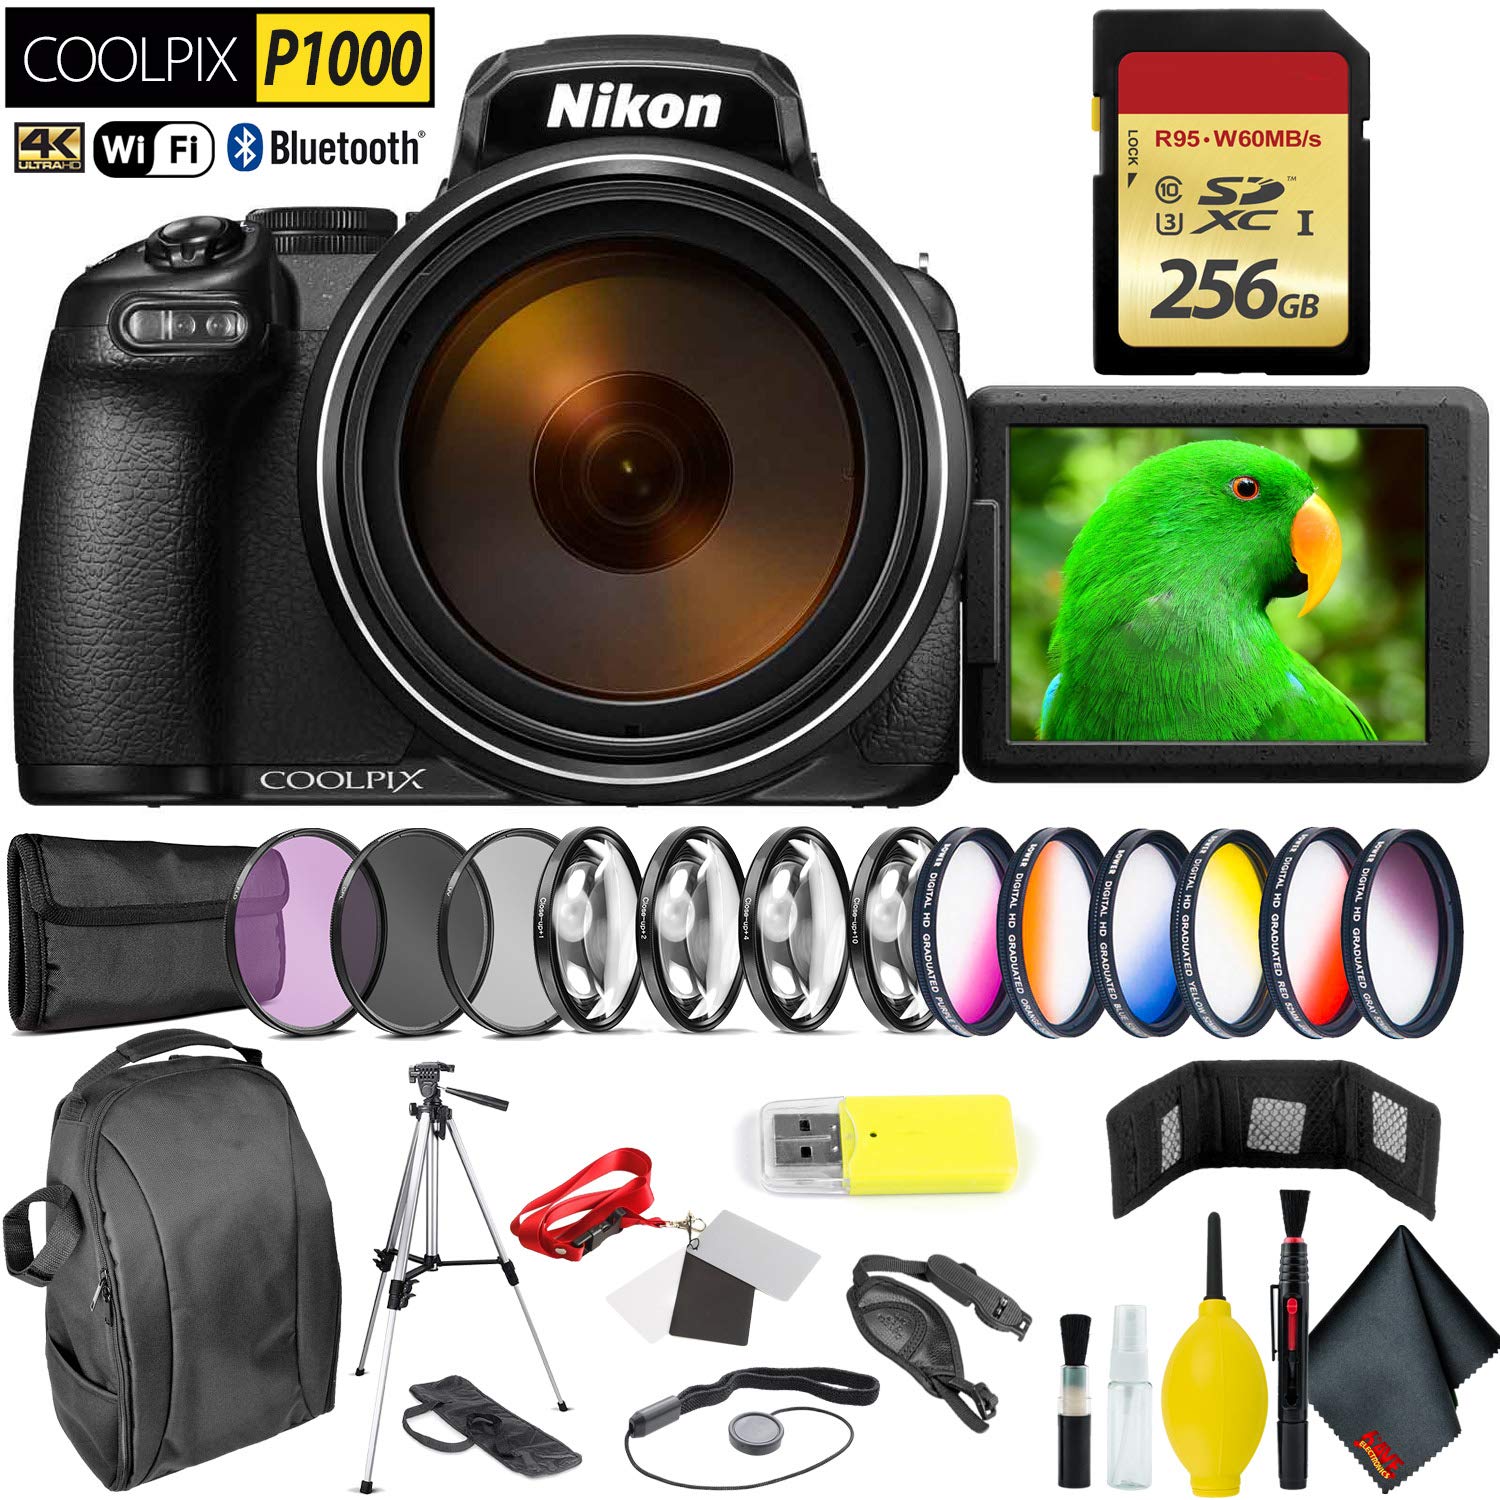 Nikon COOLPIX P1000 Digital Camera + 256GB Memory Card Professional Bundle International Model